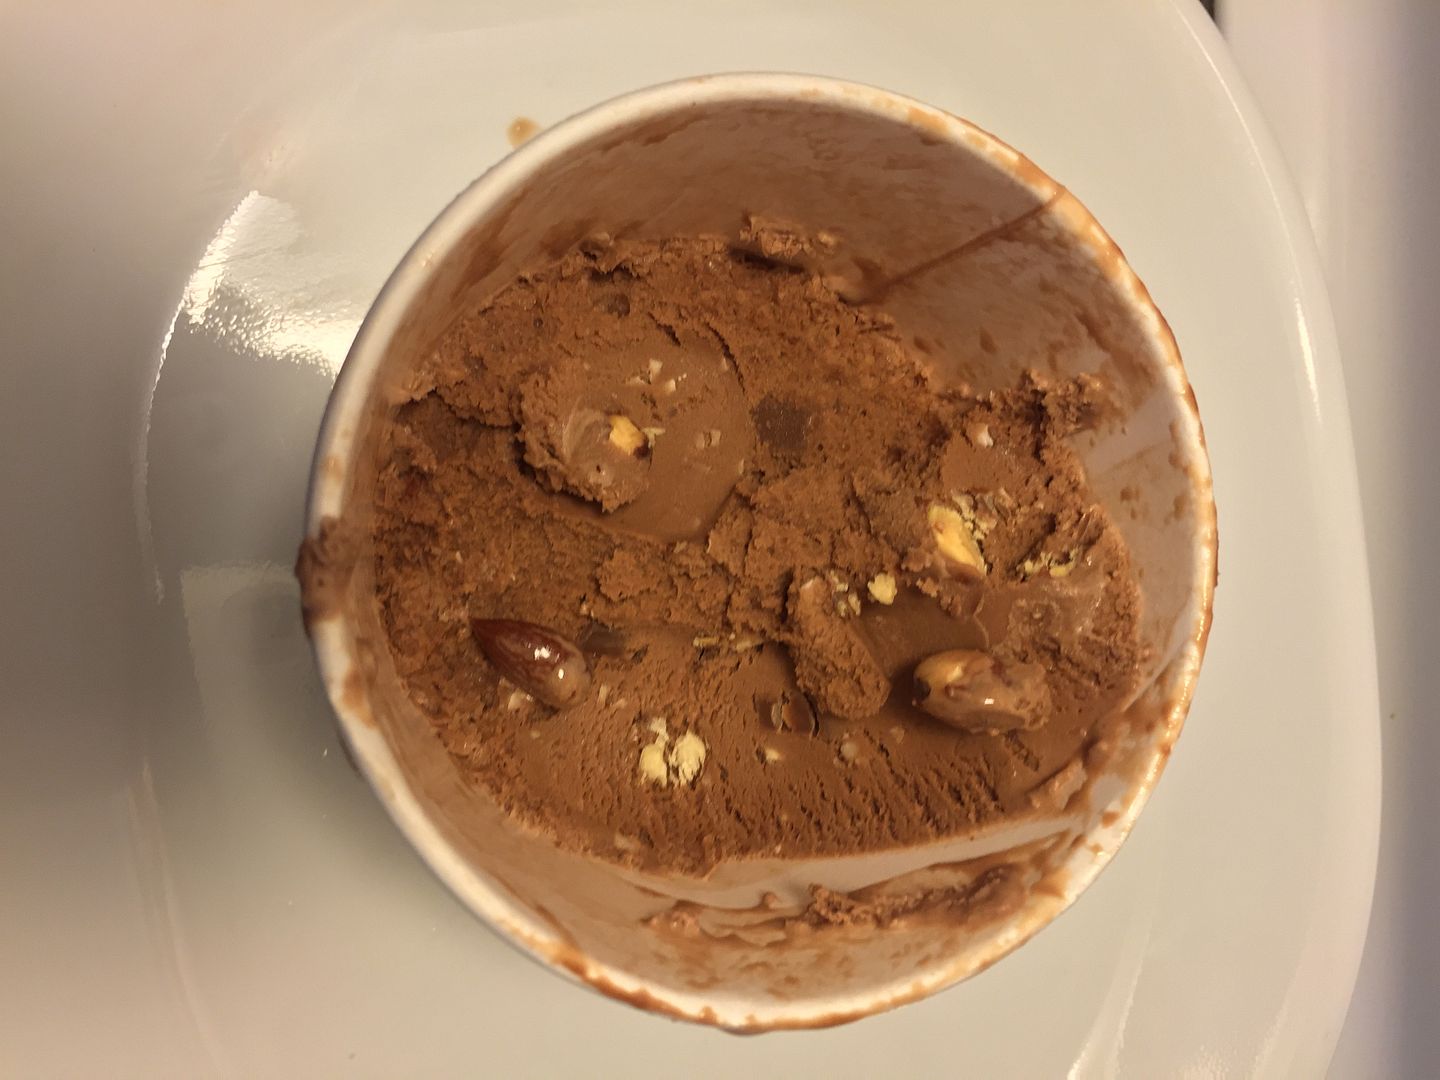 Graeter's Chocolate Coconut Almond Chocolate Chip